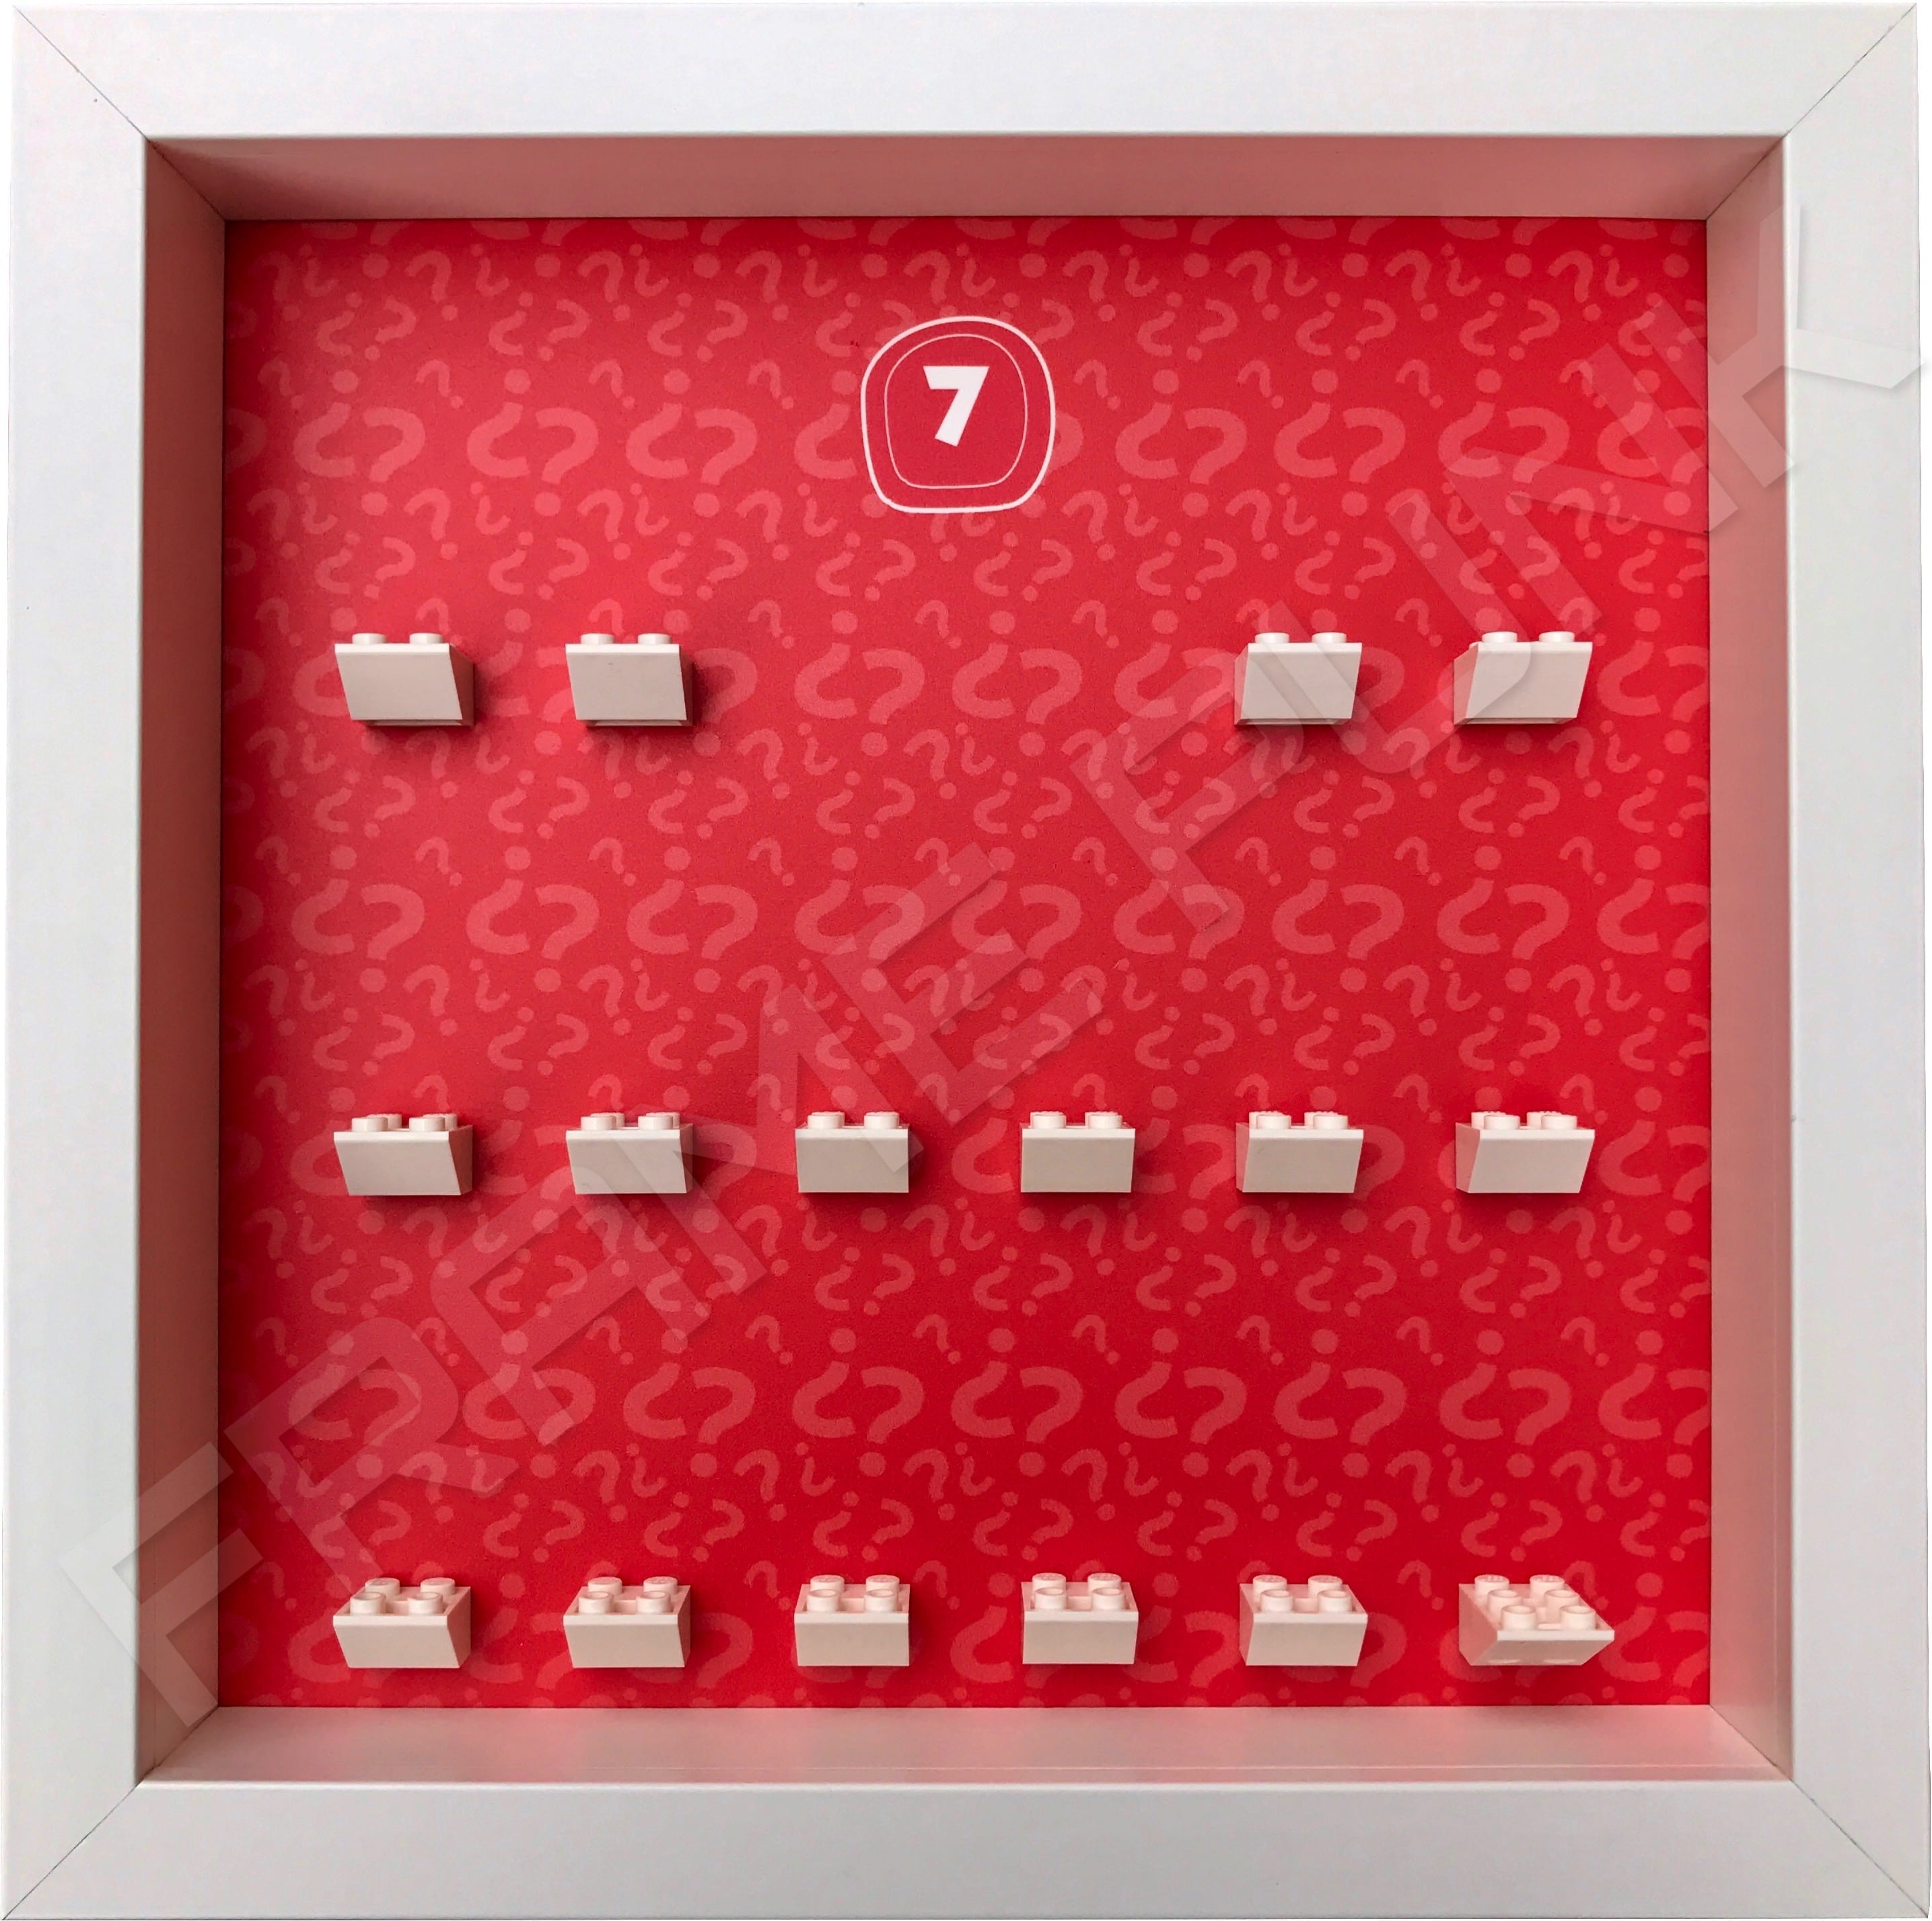 Lego minifigures series 7 display frame